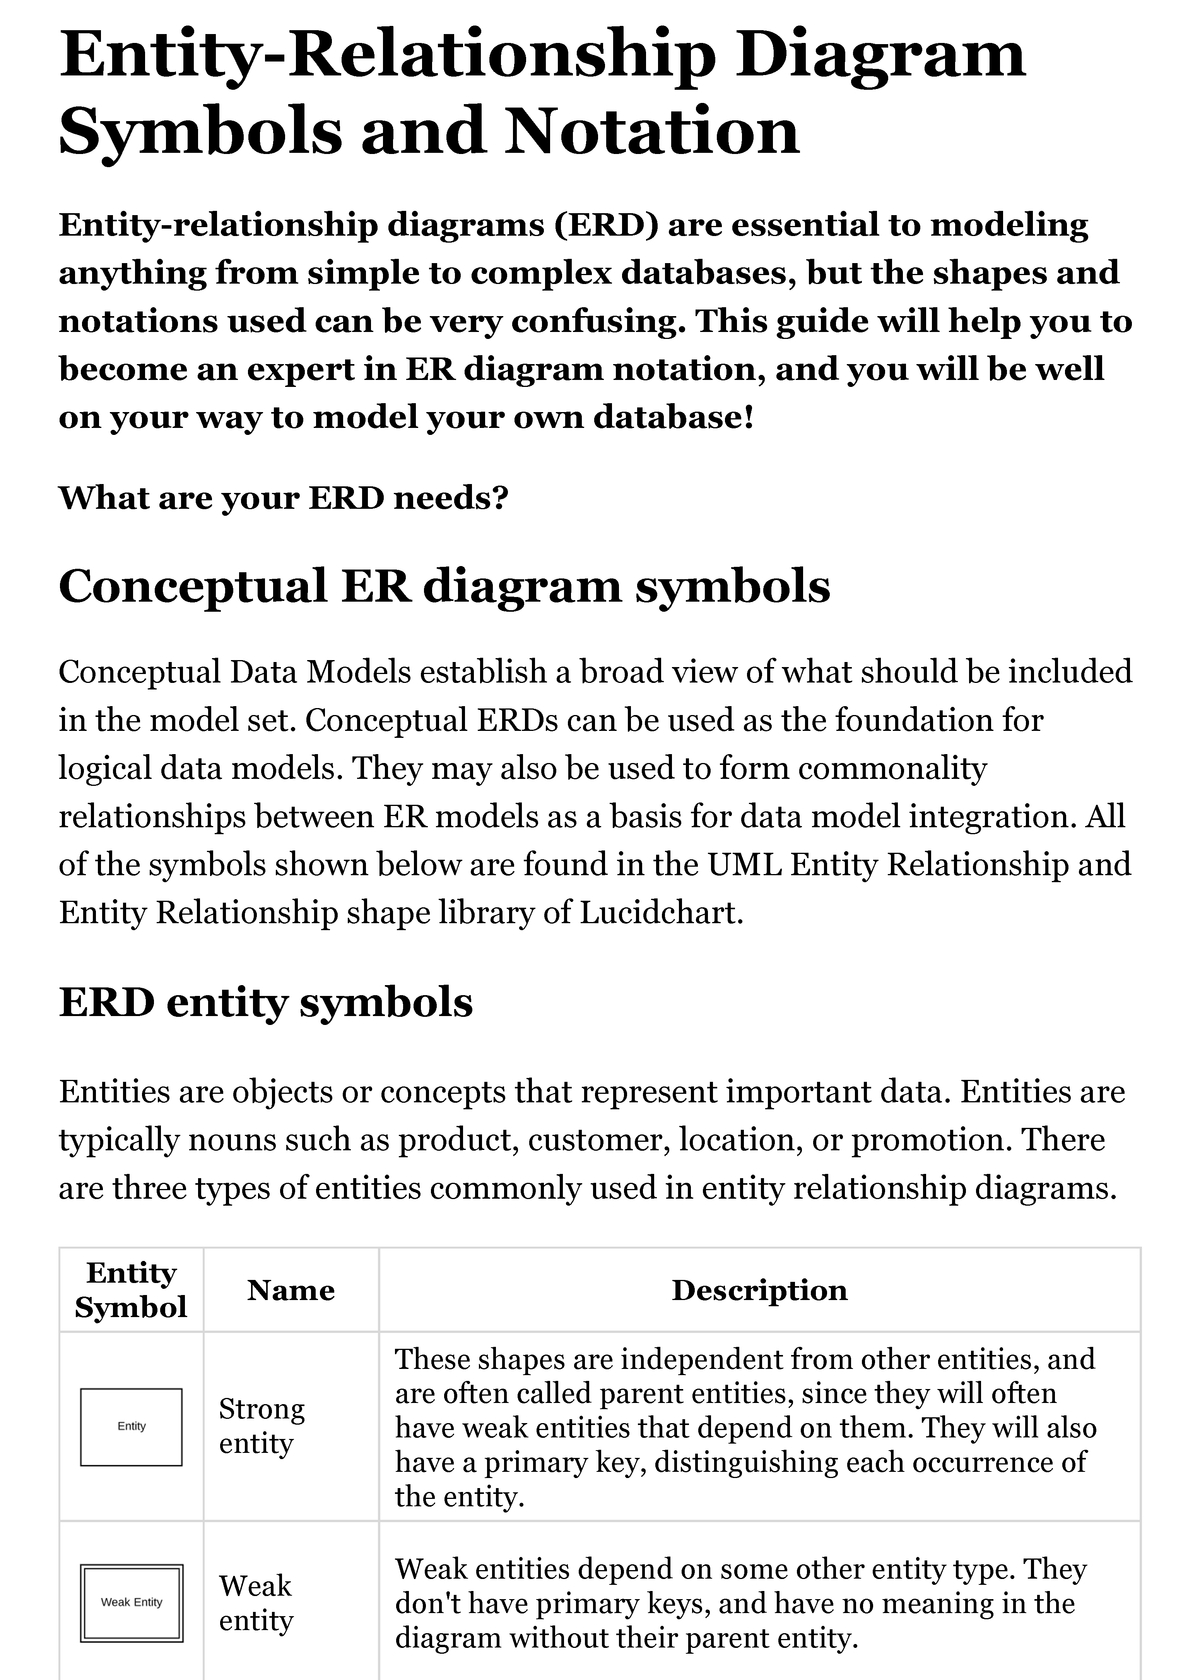 Entity-Relationship Diagram Symbols And Notation Lucidchart intended for Symbols Used In Er Diagram